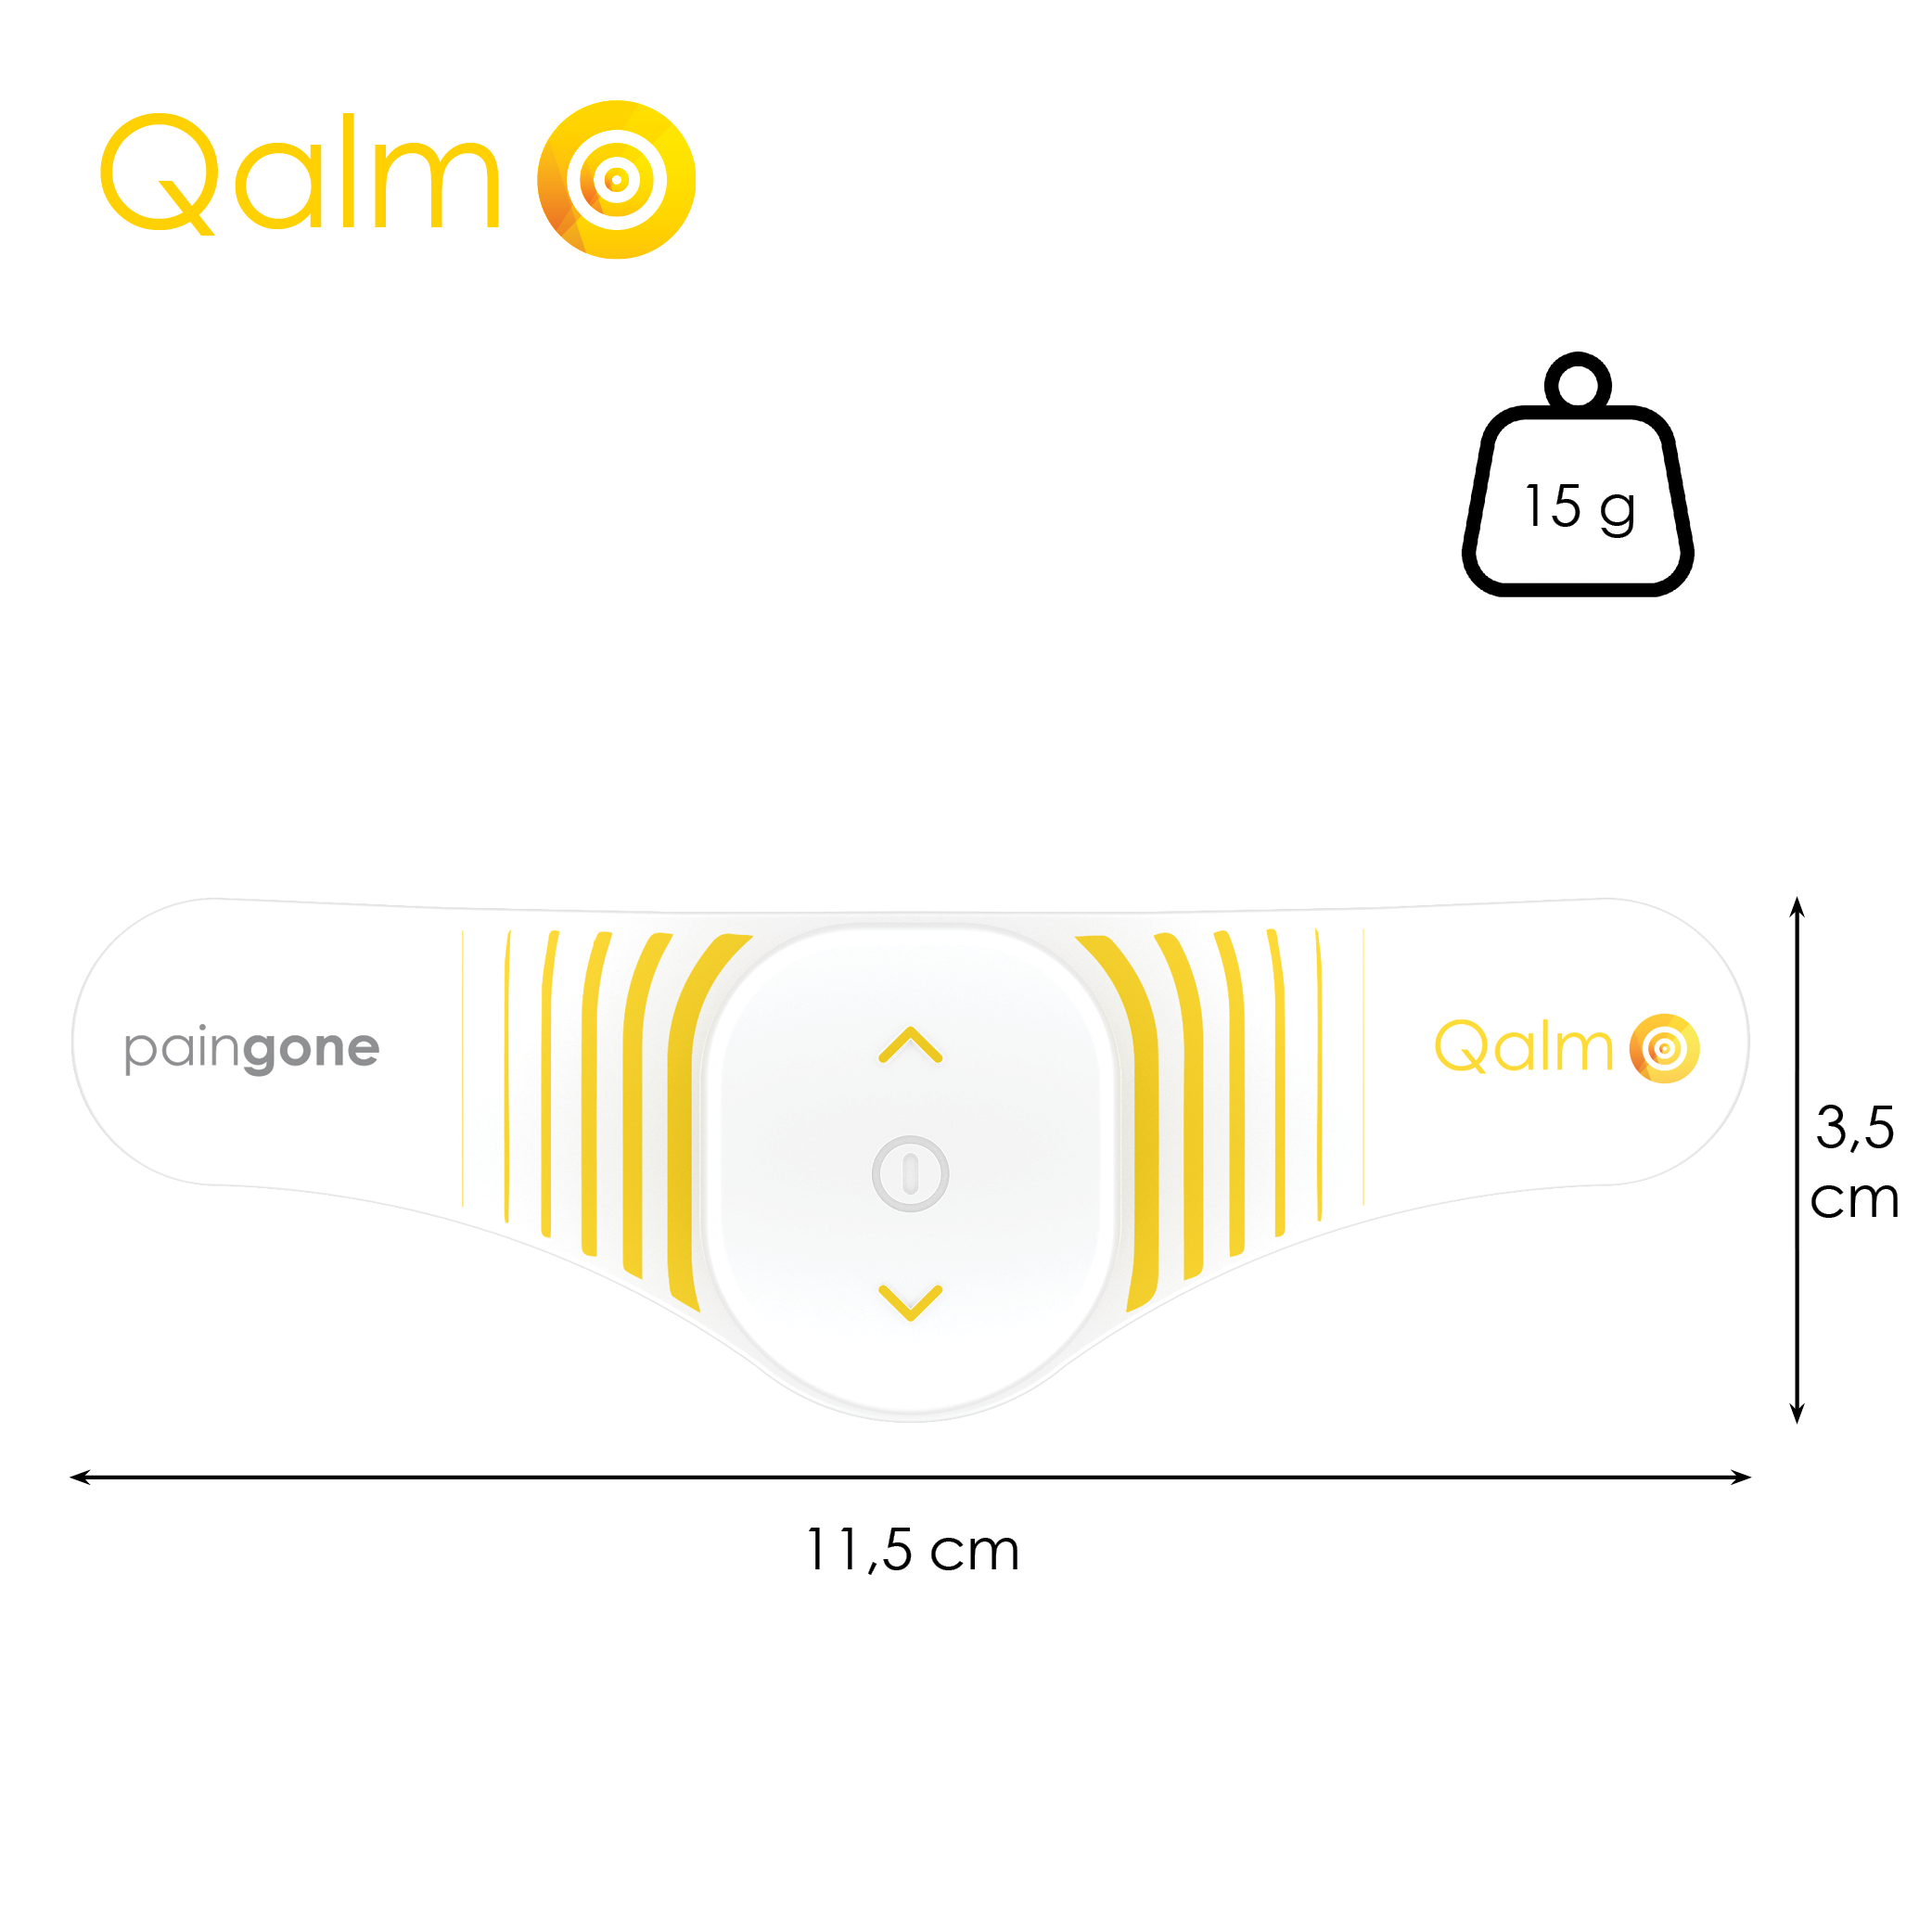 Paingone Qalm_Measurements